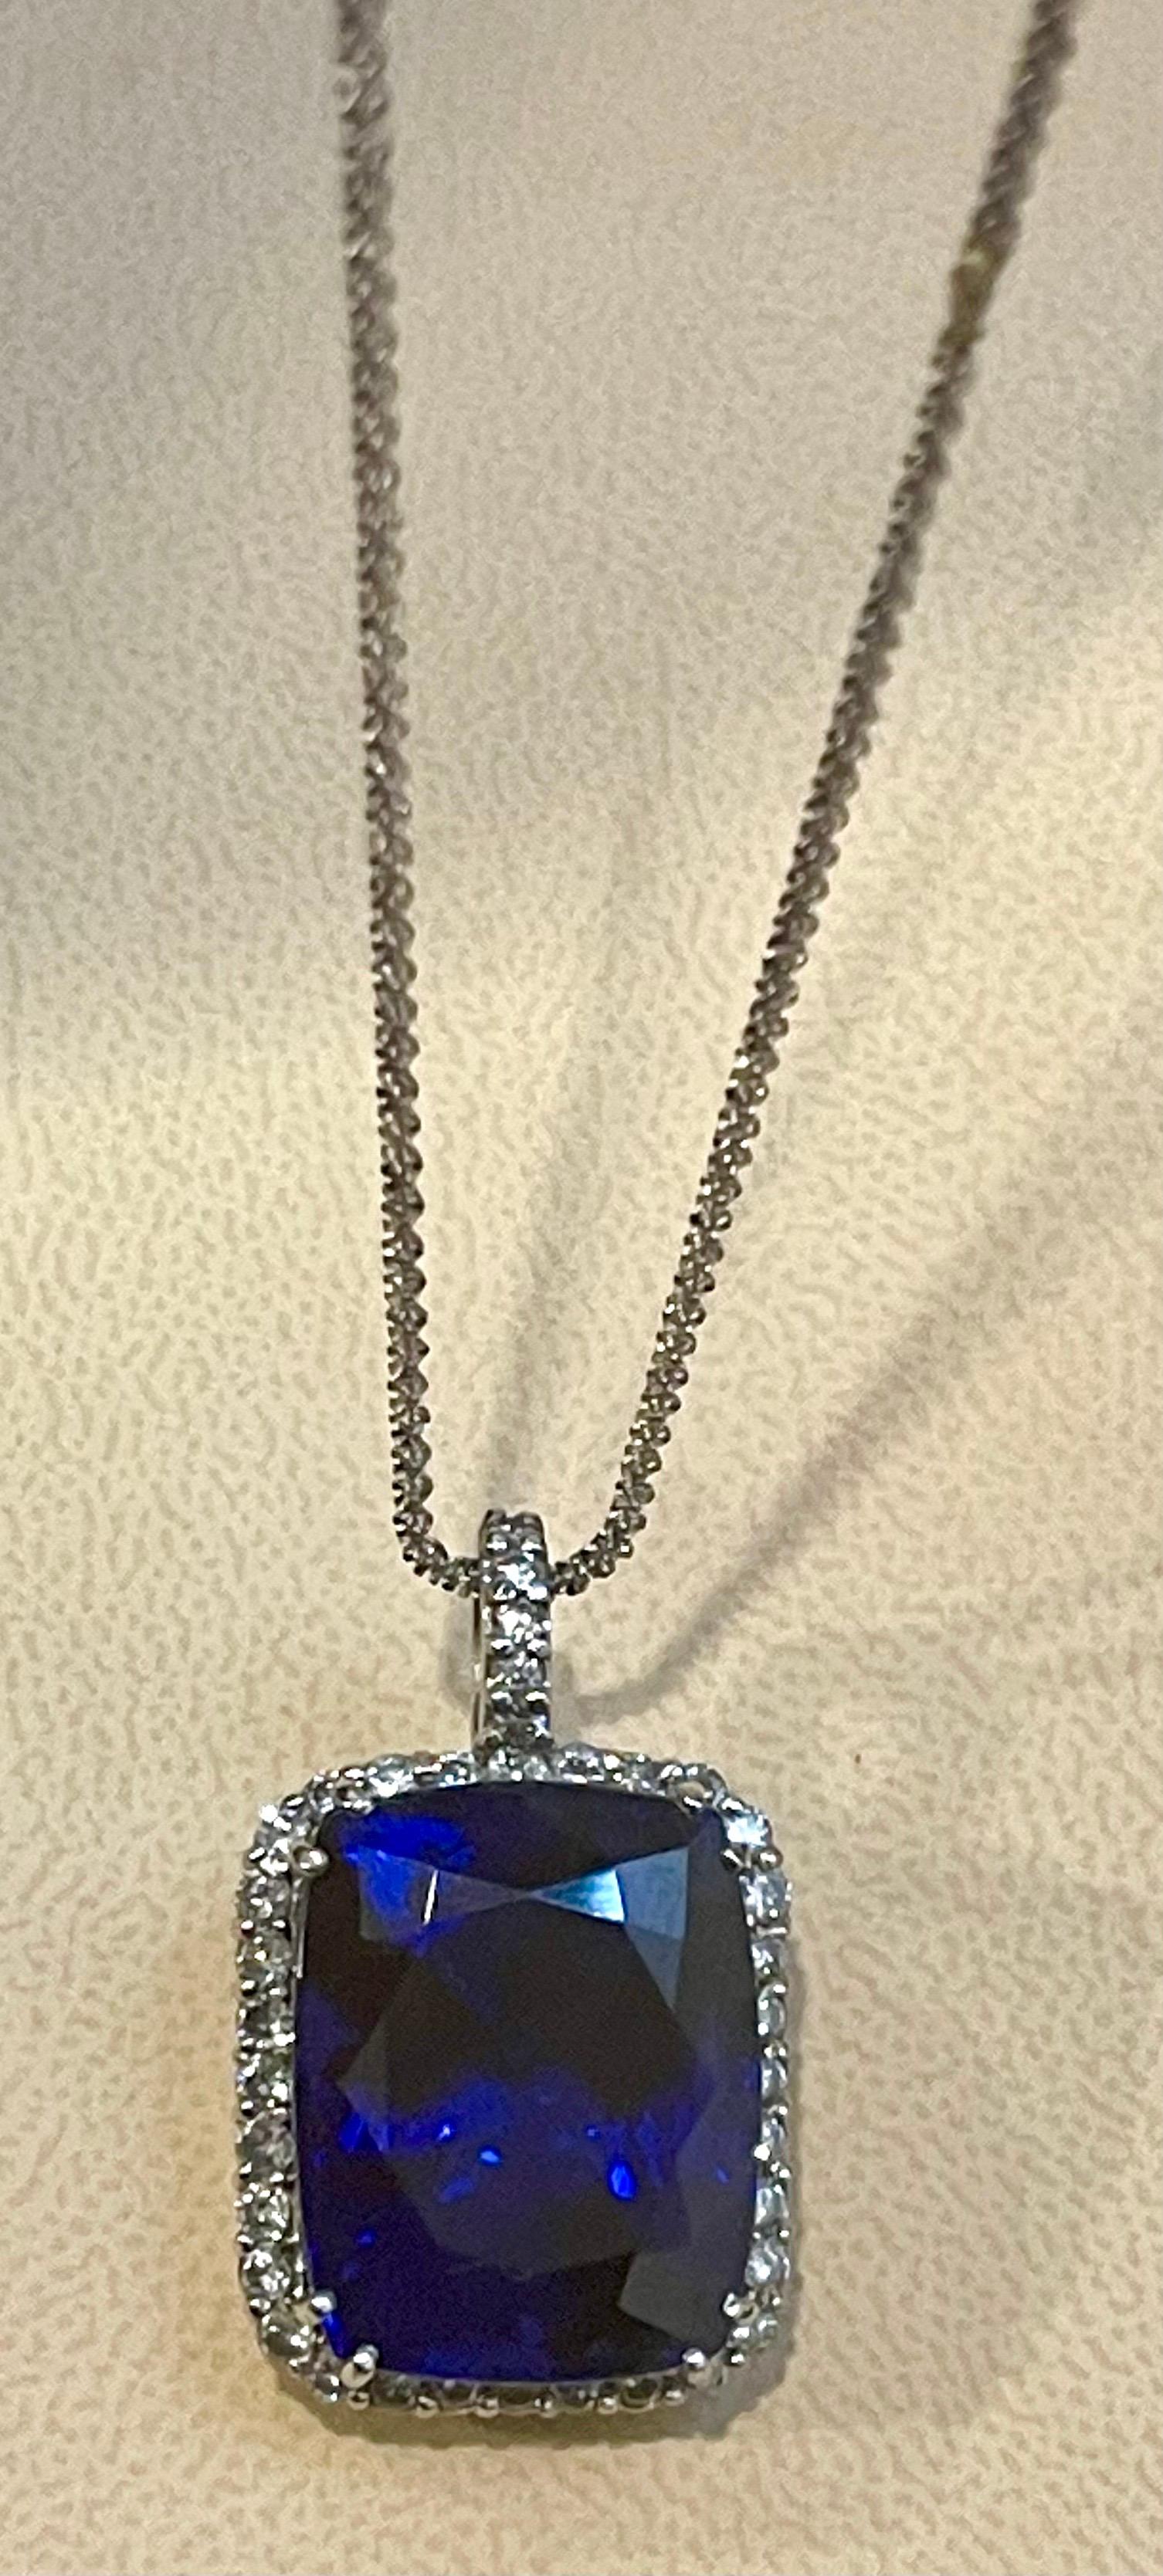 37.5 Carat Tanzanite Necklace & Diamond Pendant with Chain 14 Karat White Gold For Sale 12